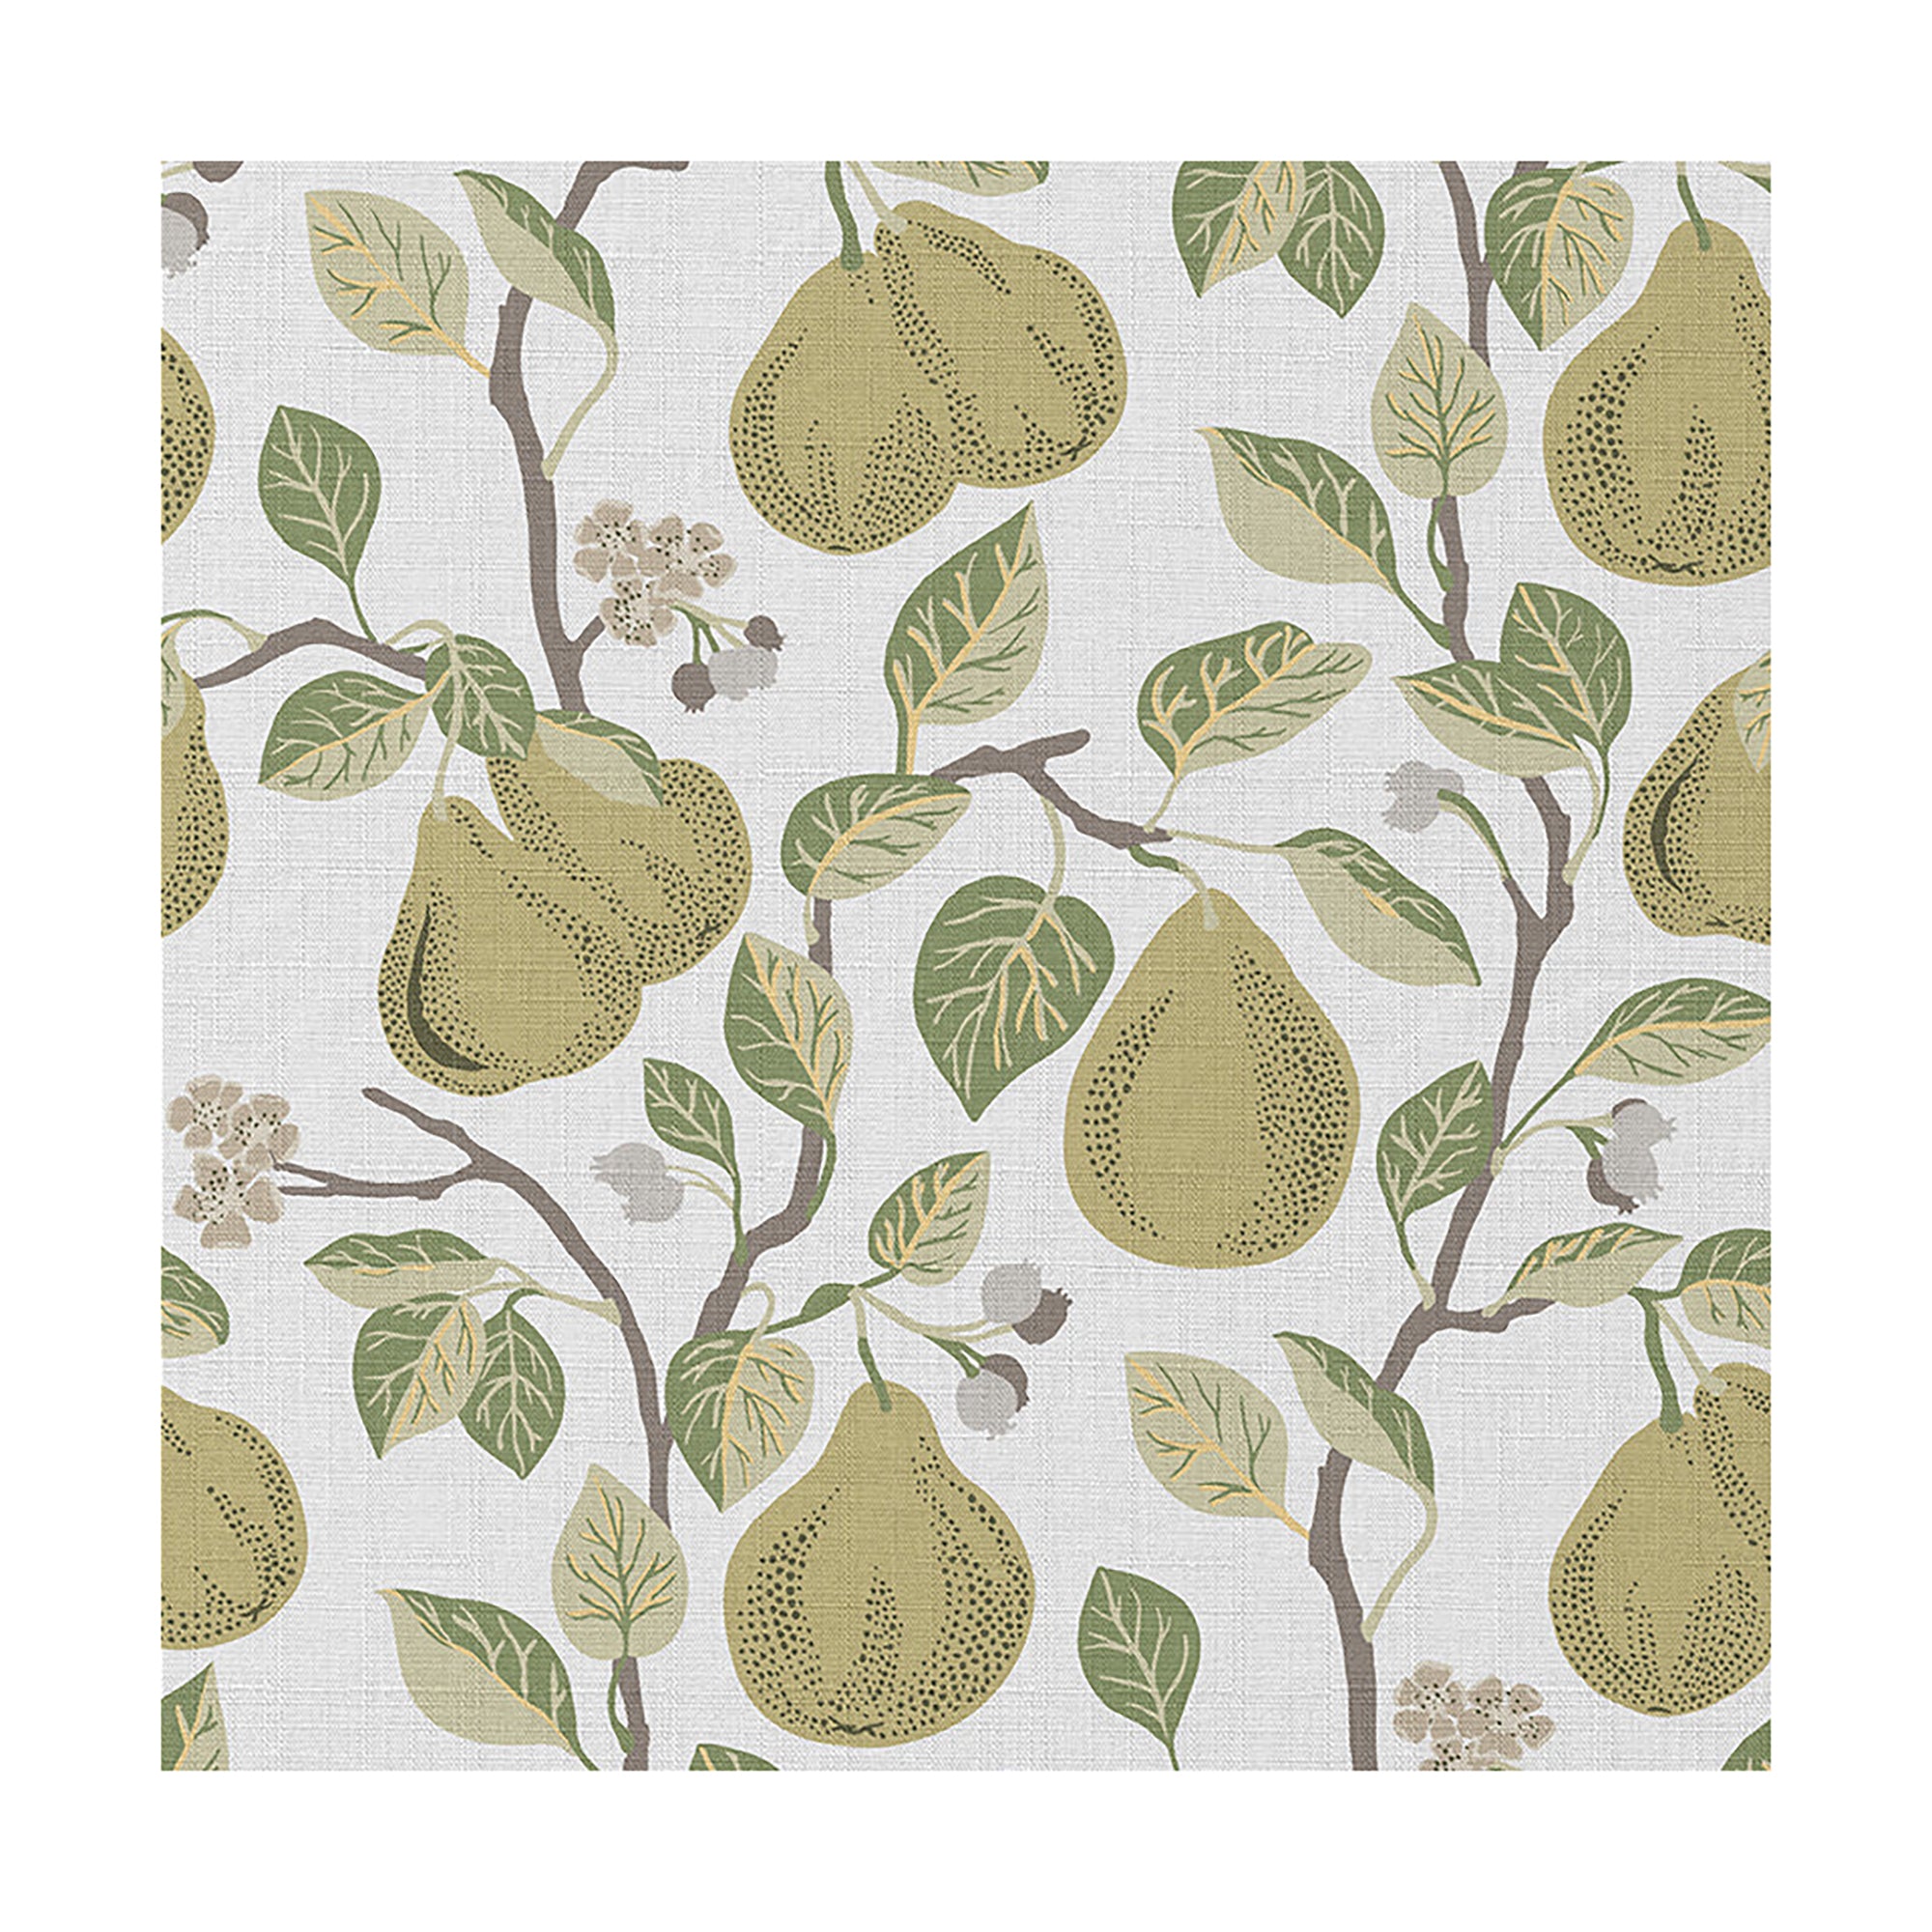 Showering Pears | Somerset Green